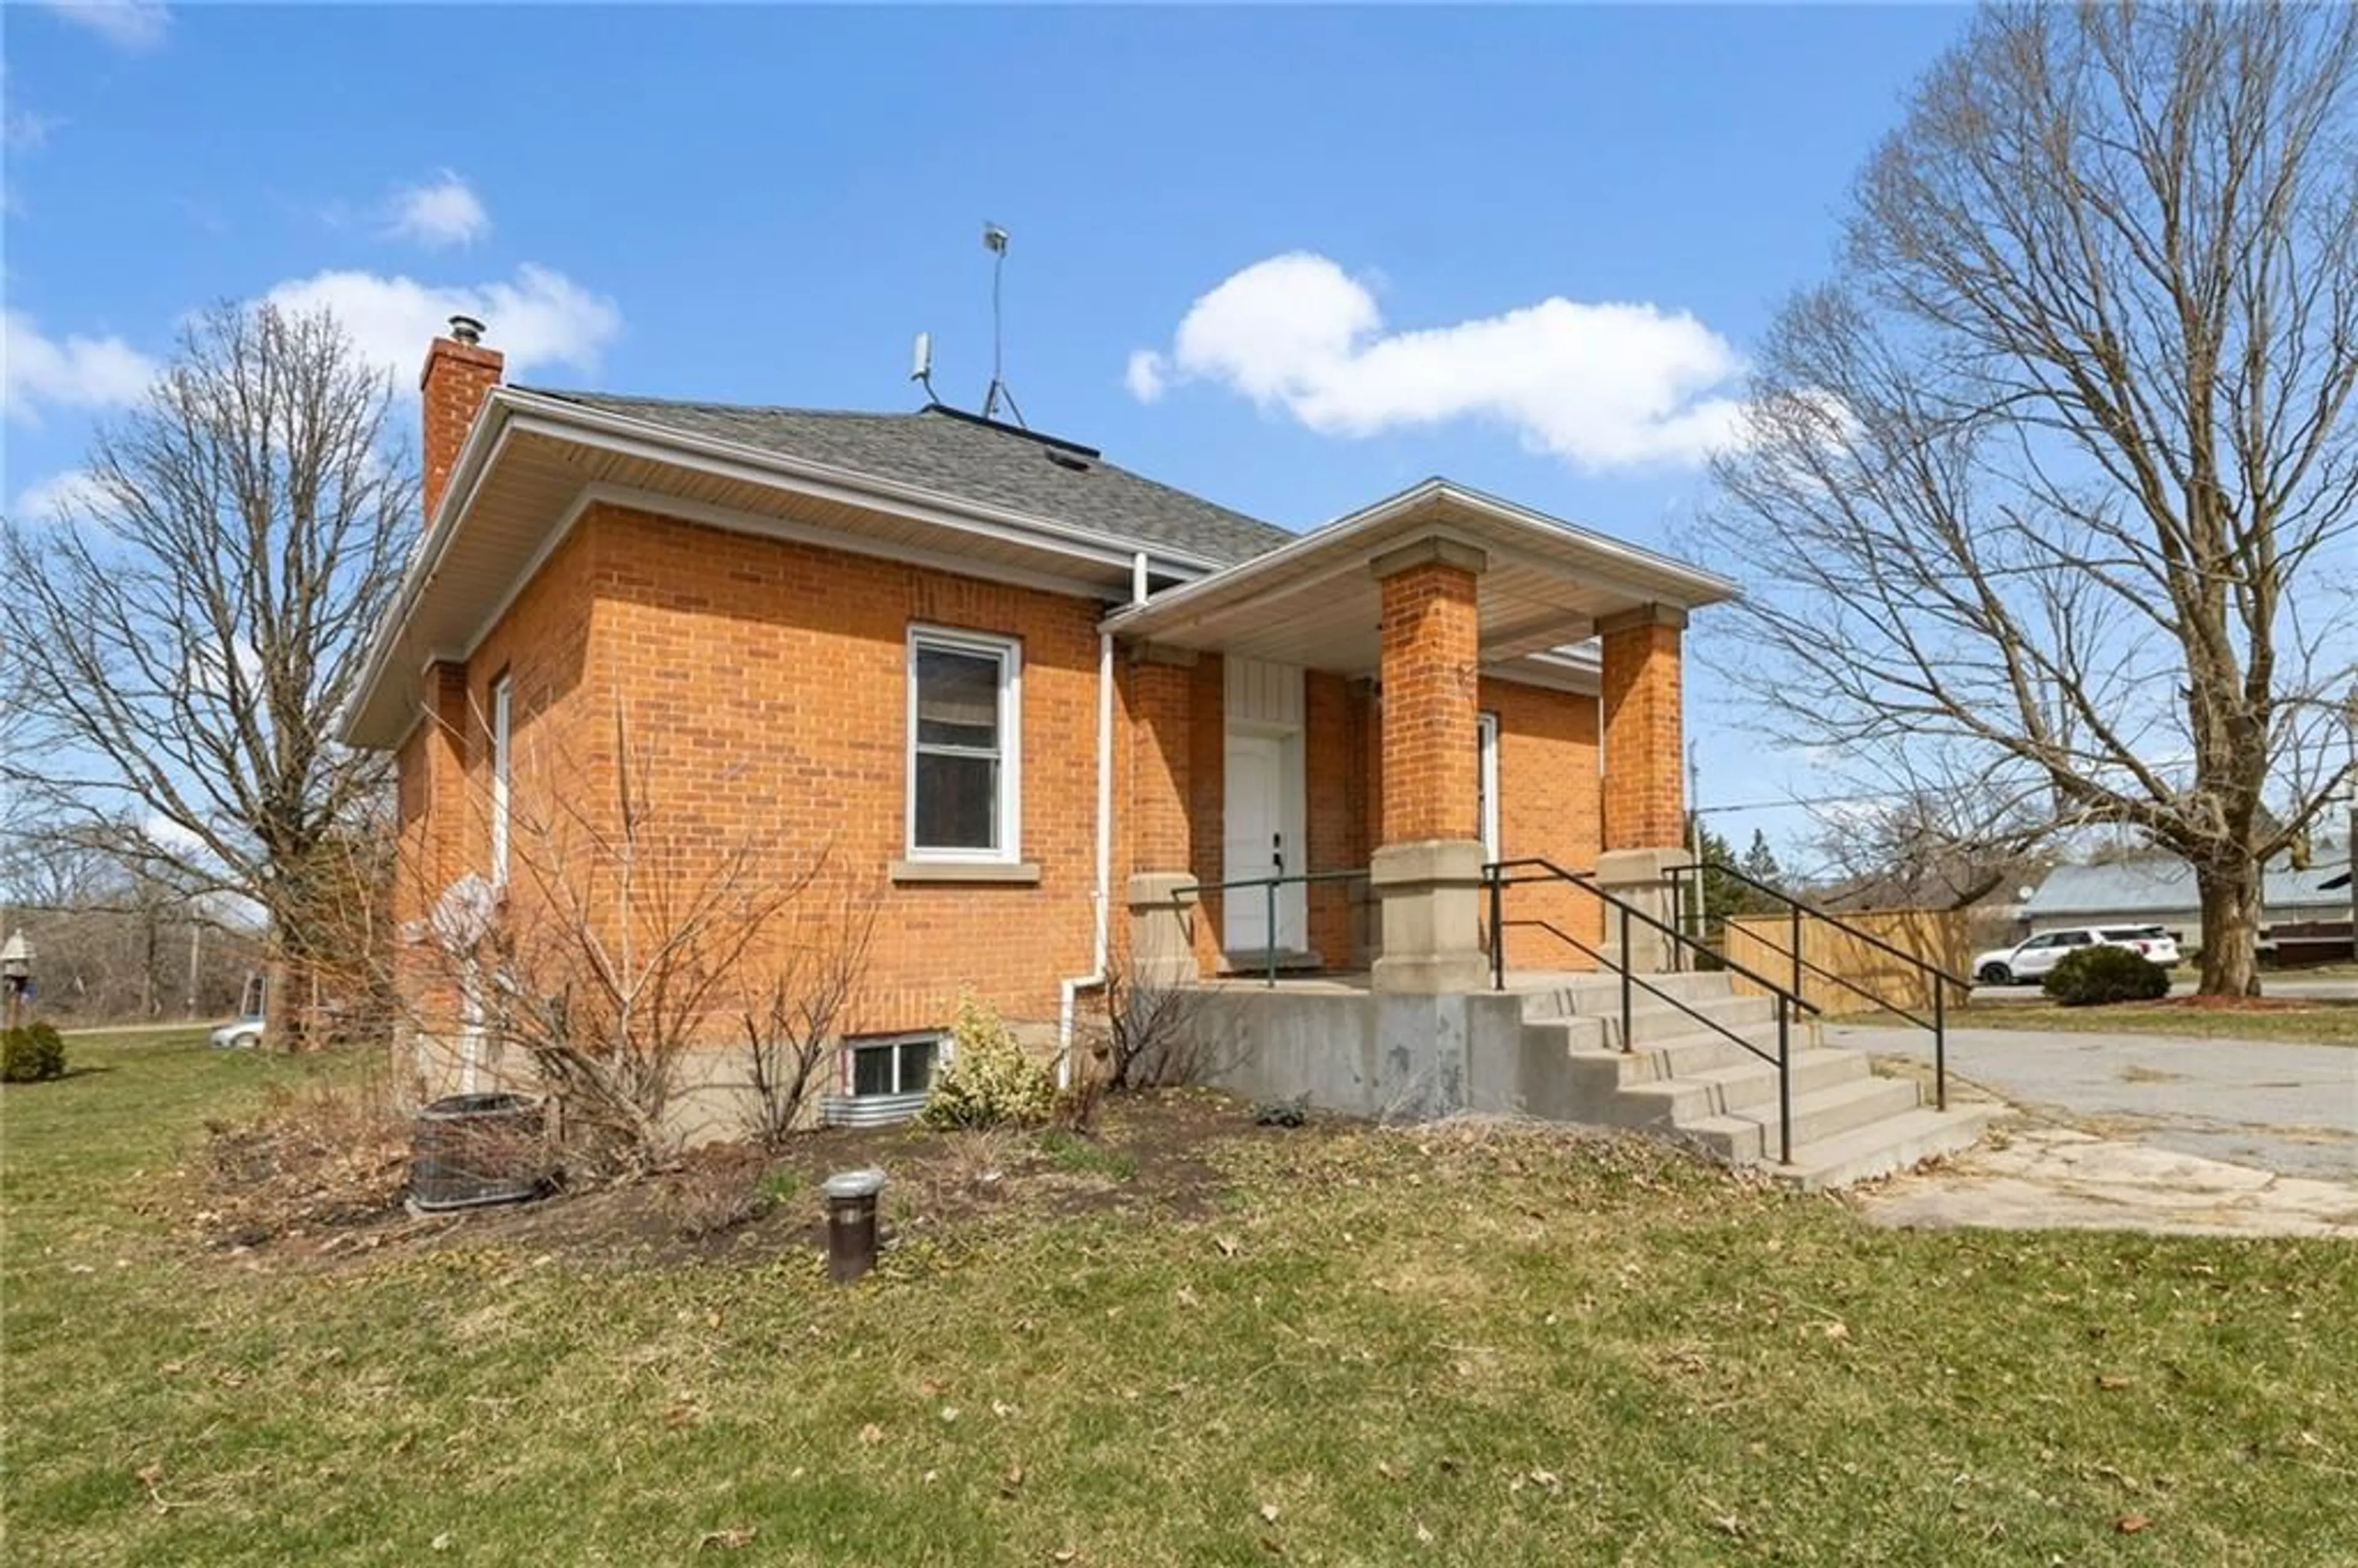 Home with brick exterior material for 9366 ADDISON GREENBUSH Rd, Addison Ontario K0E 1A0